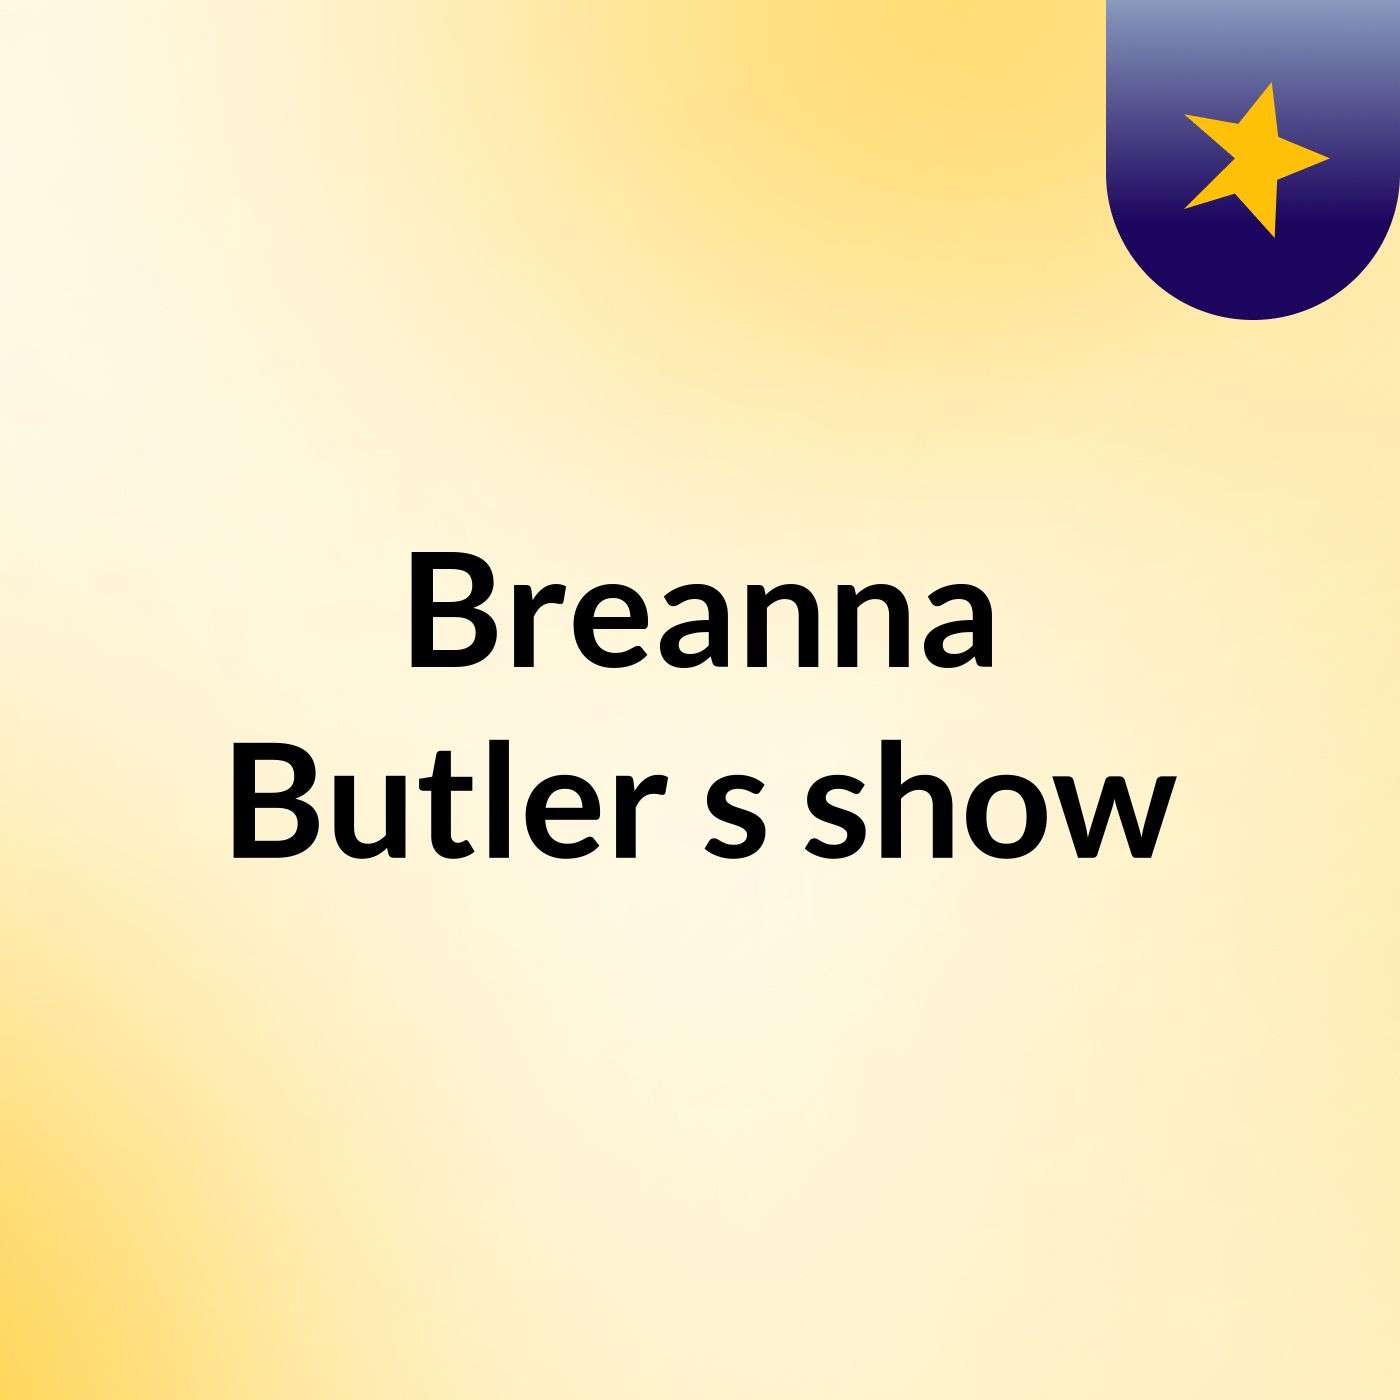 Breanna Butler's show